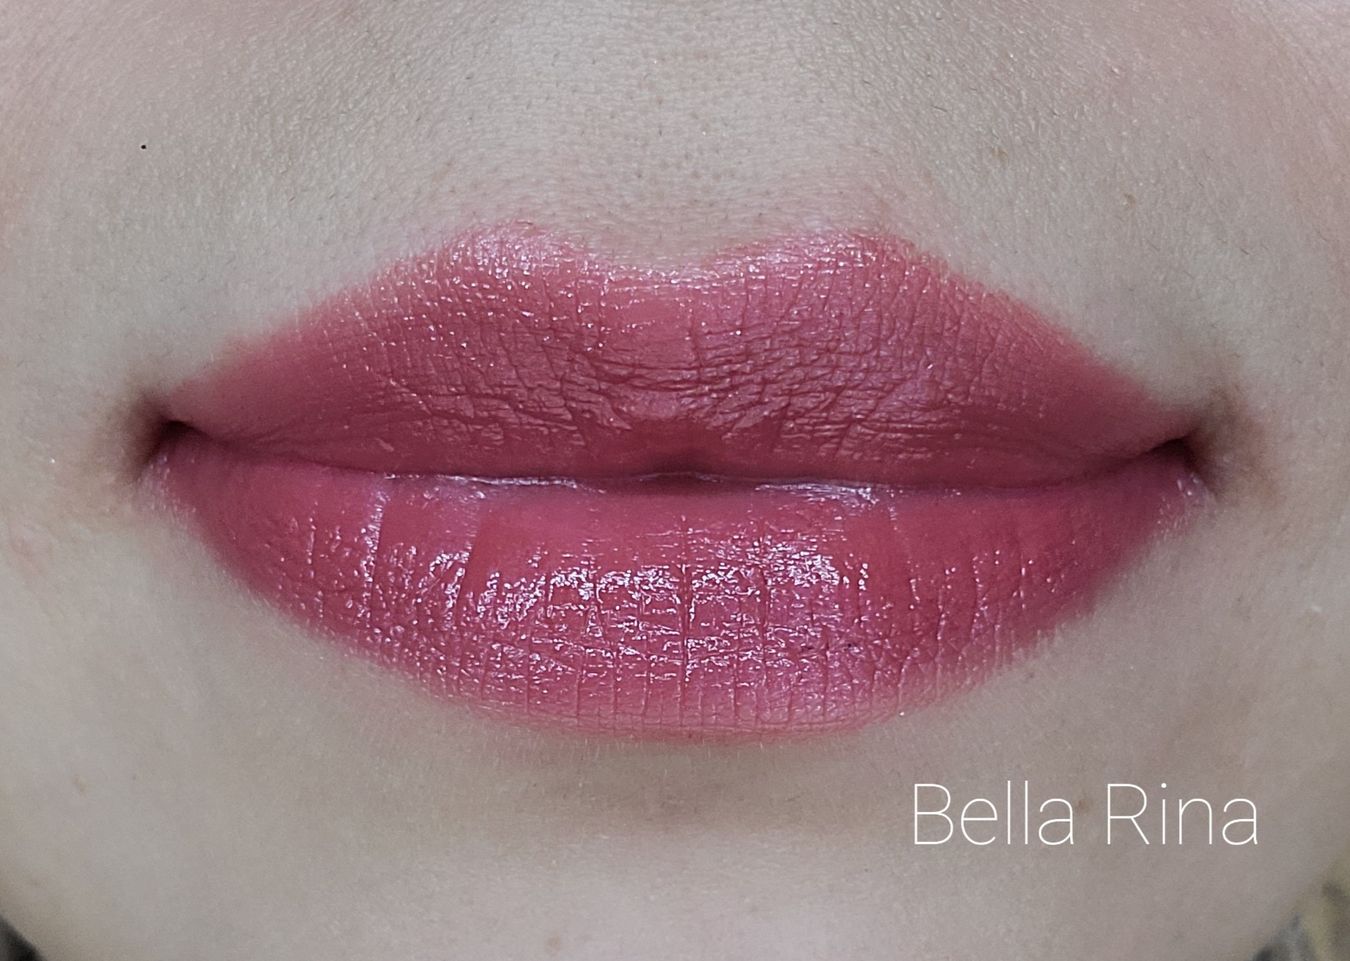 Image of close up lips wearing the shade called Bella Rina. A warm medium pink.